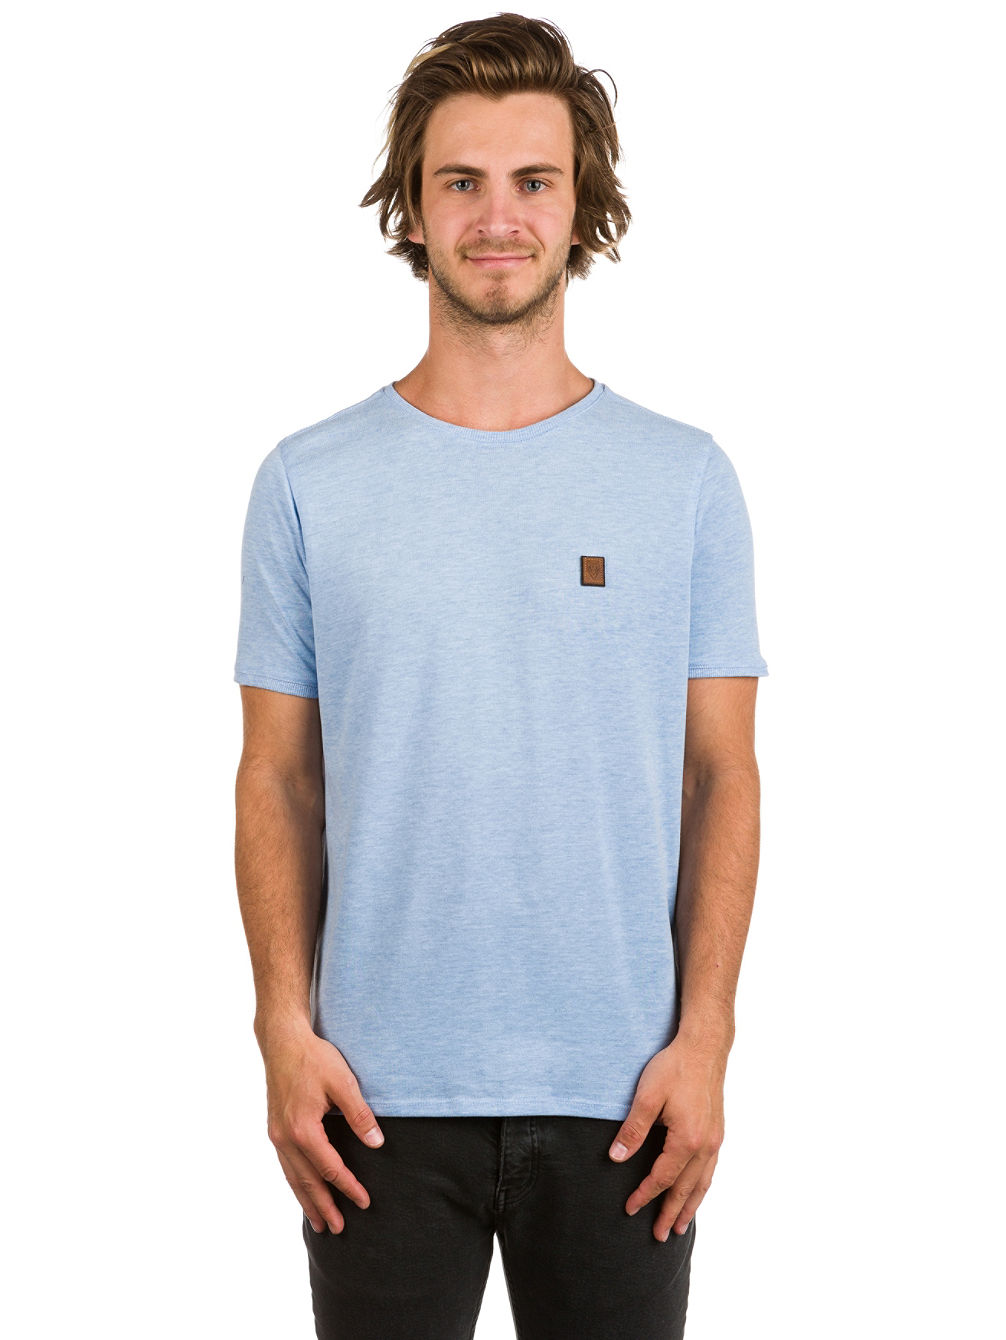 Bumsebumse Shirt IV T-Shirt